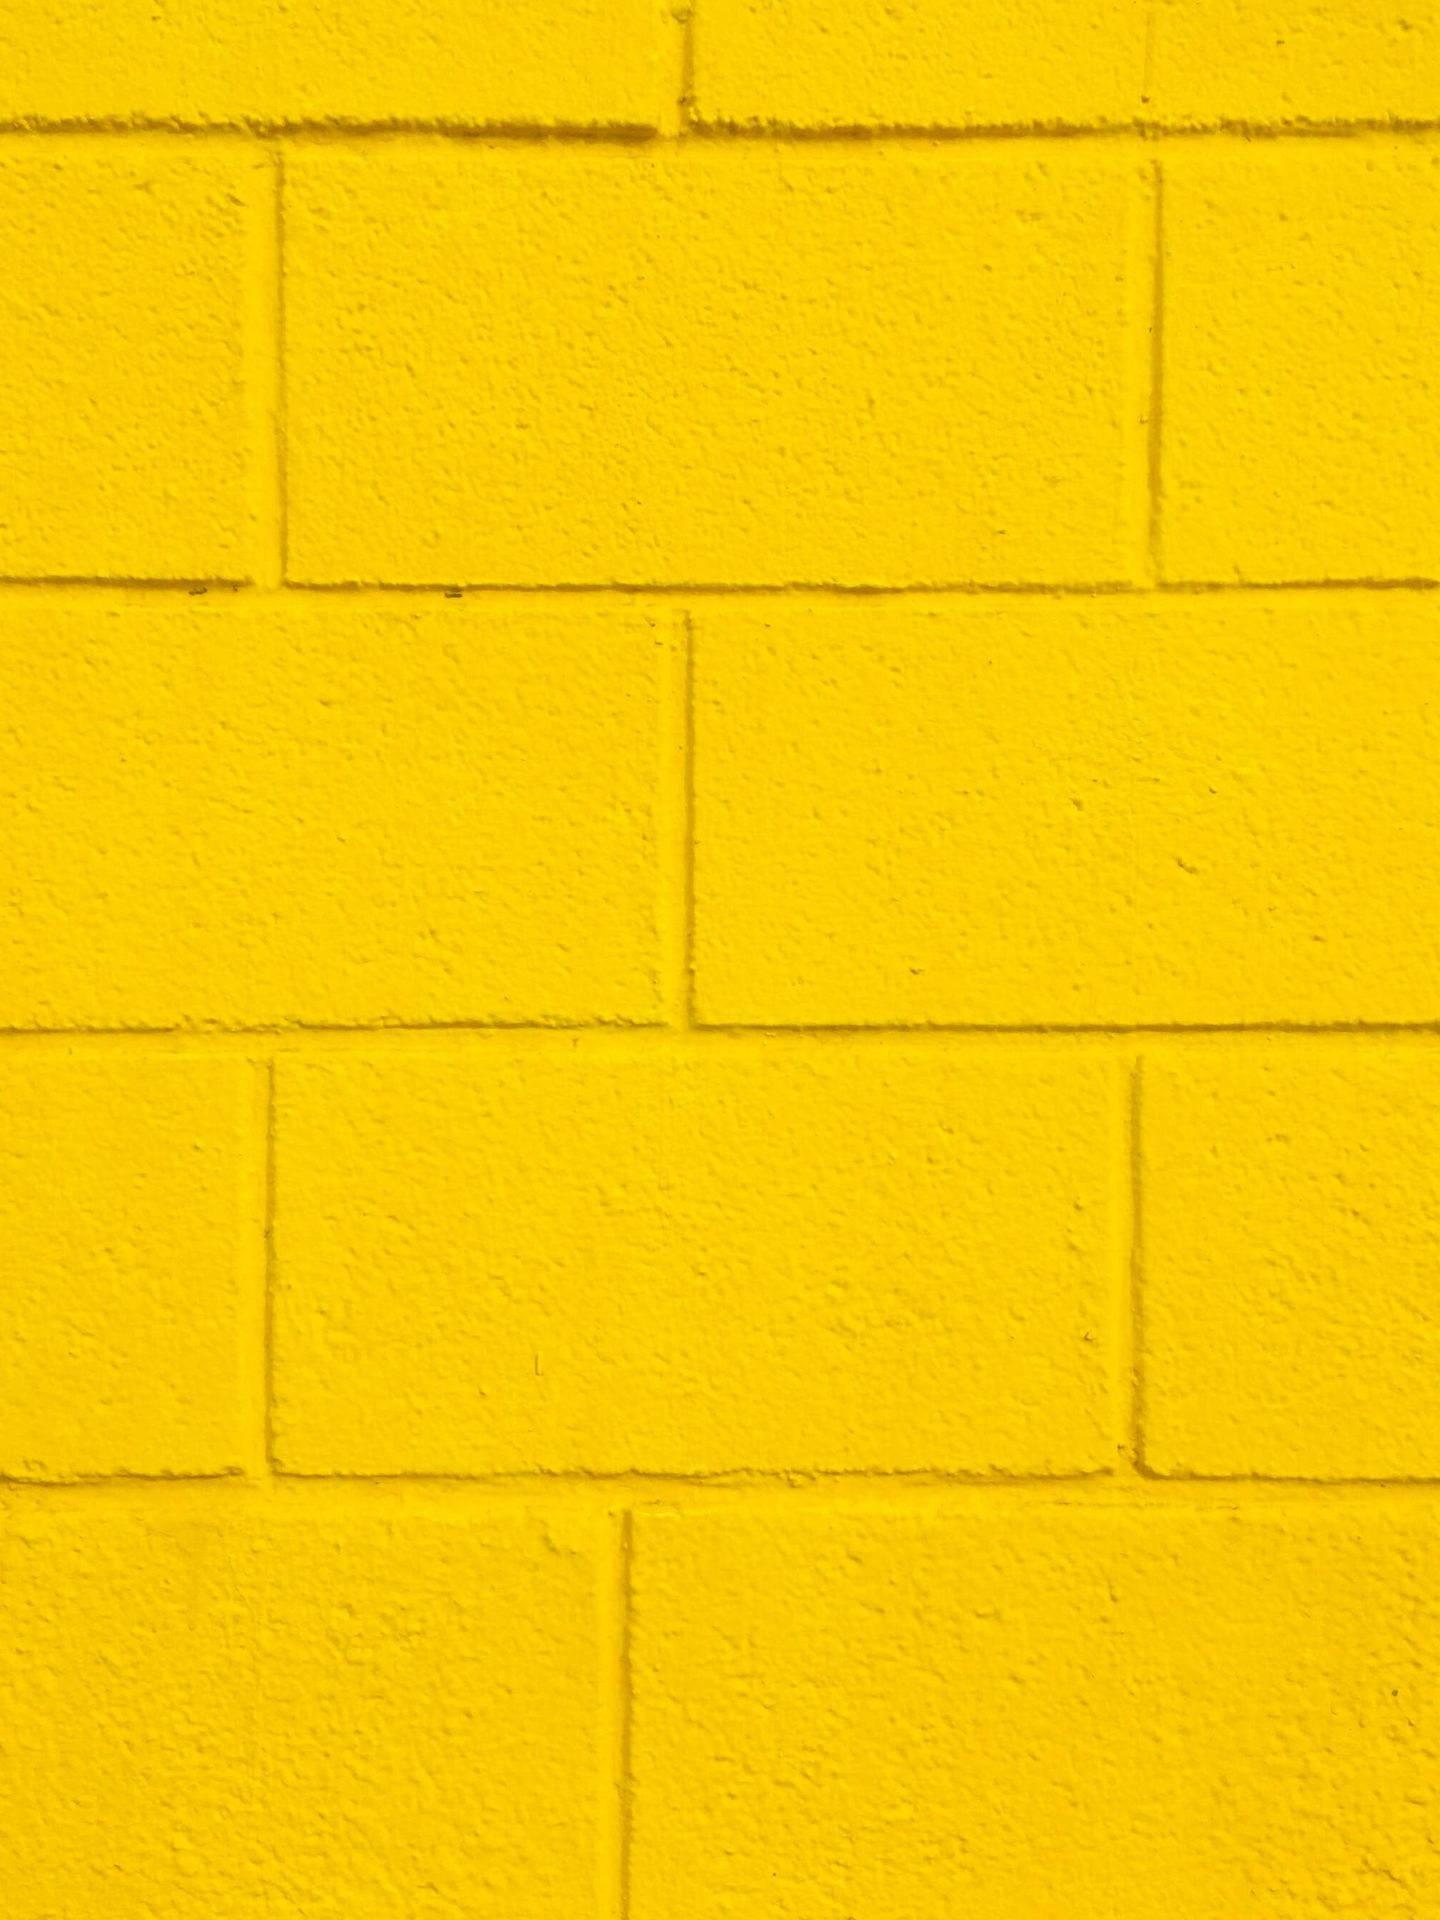 Paredes pintadas de amarillo. (Unsplash/David Pisnoy)